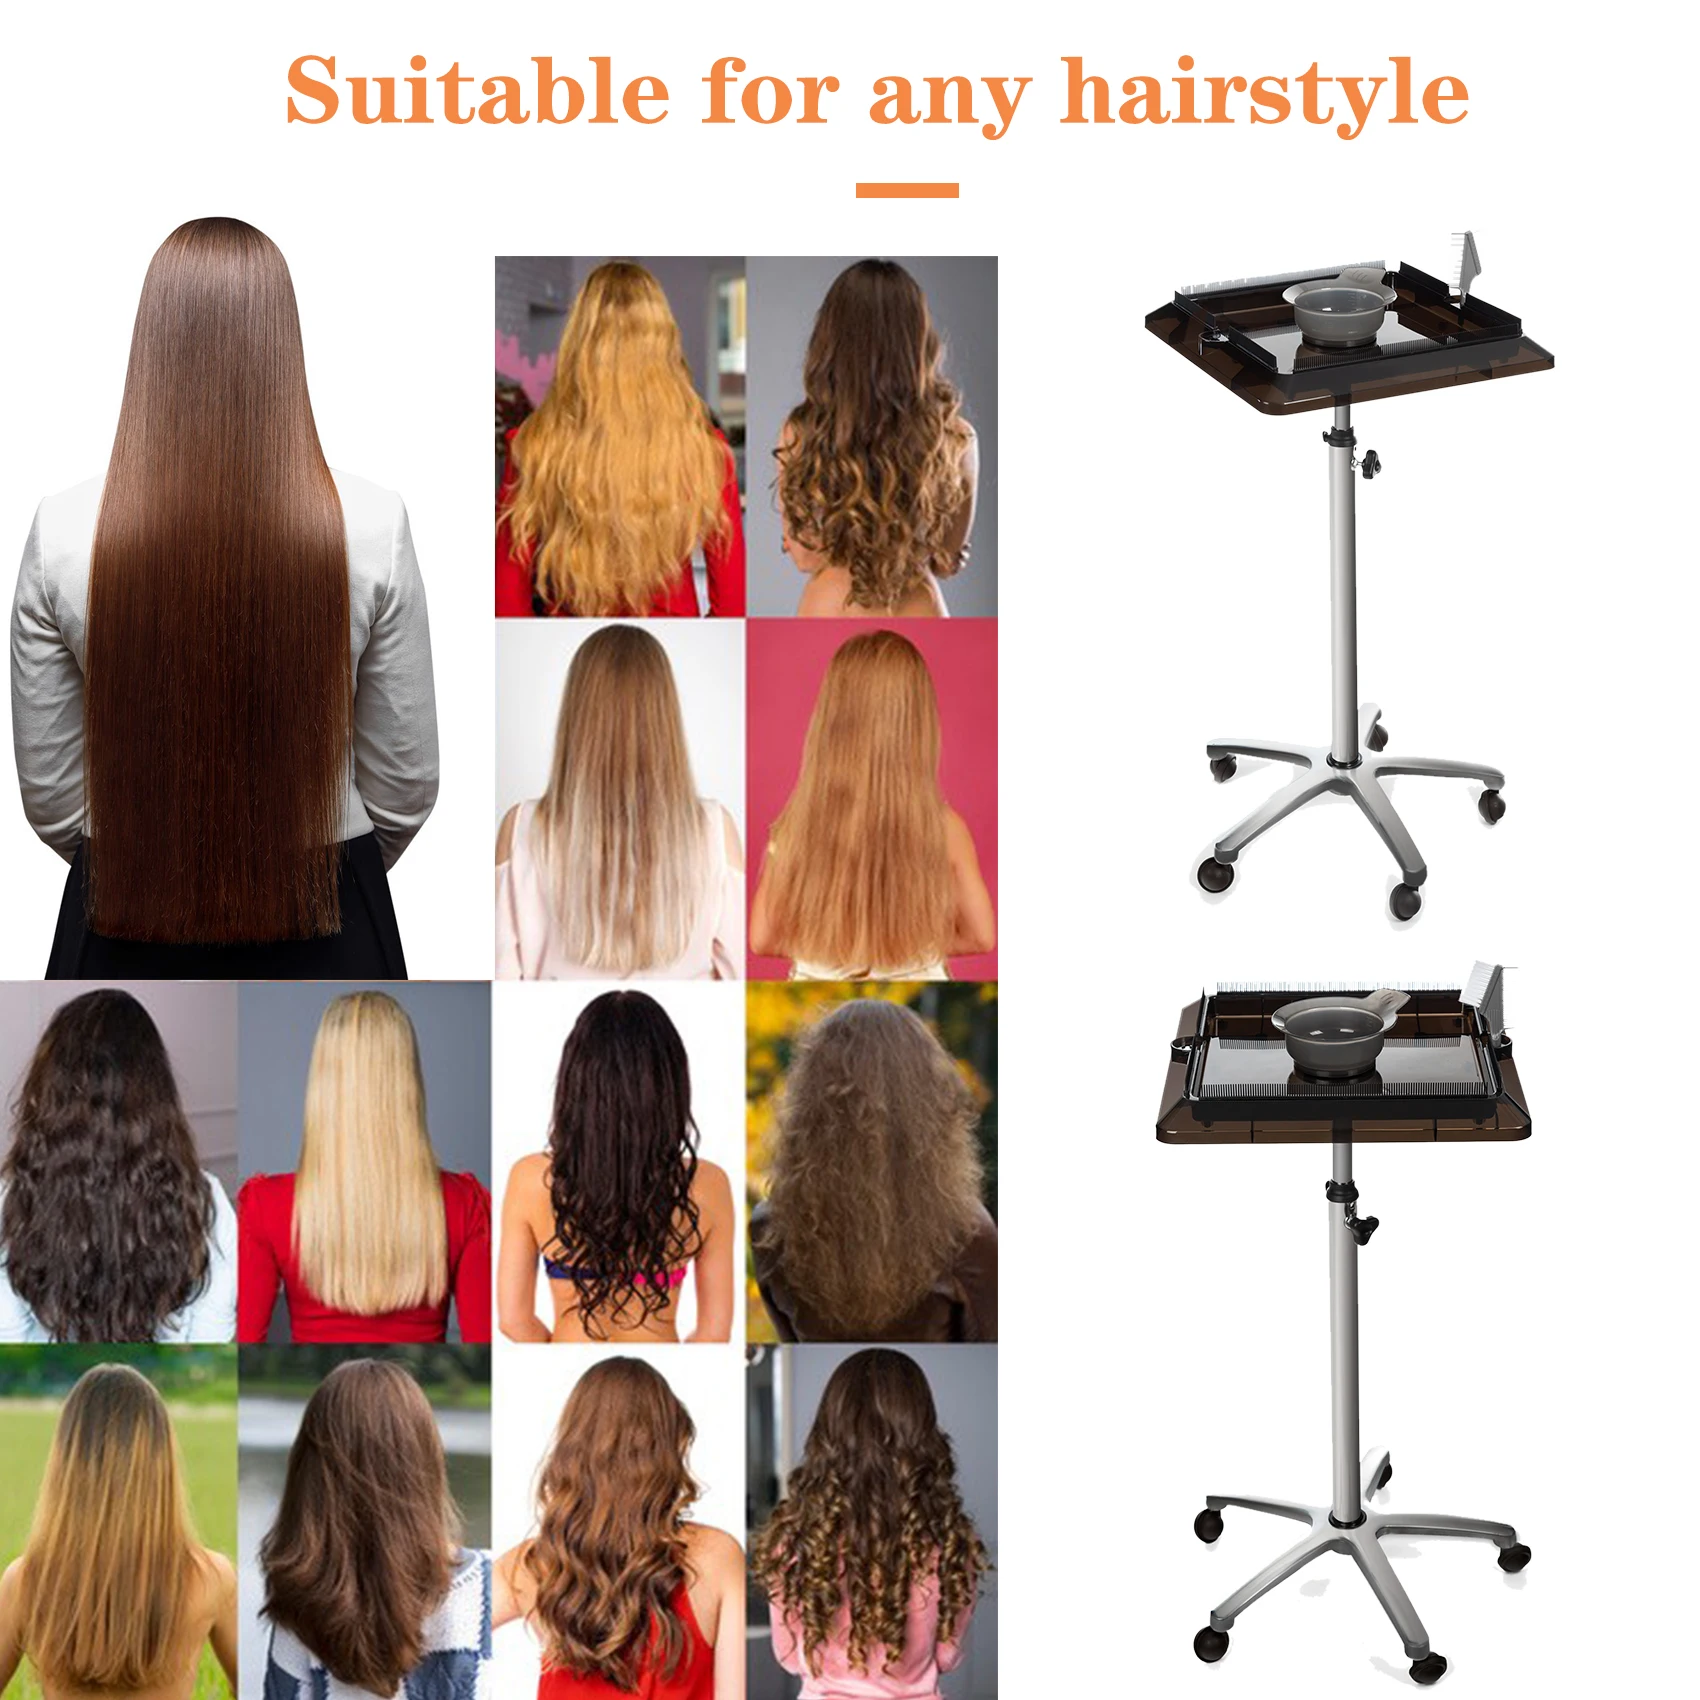 Salon Tray-Salon Service Tray-Mayo Stand-Hair Color India